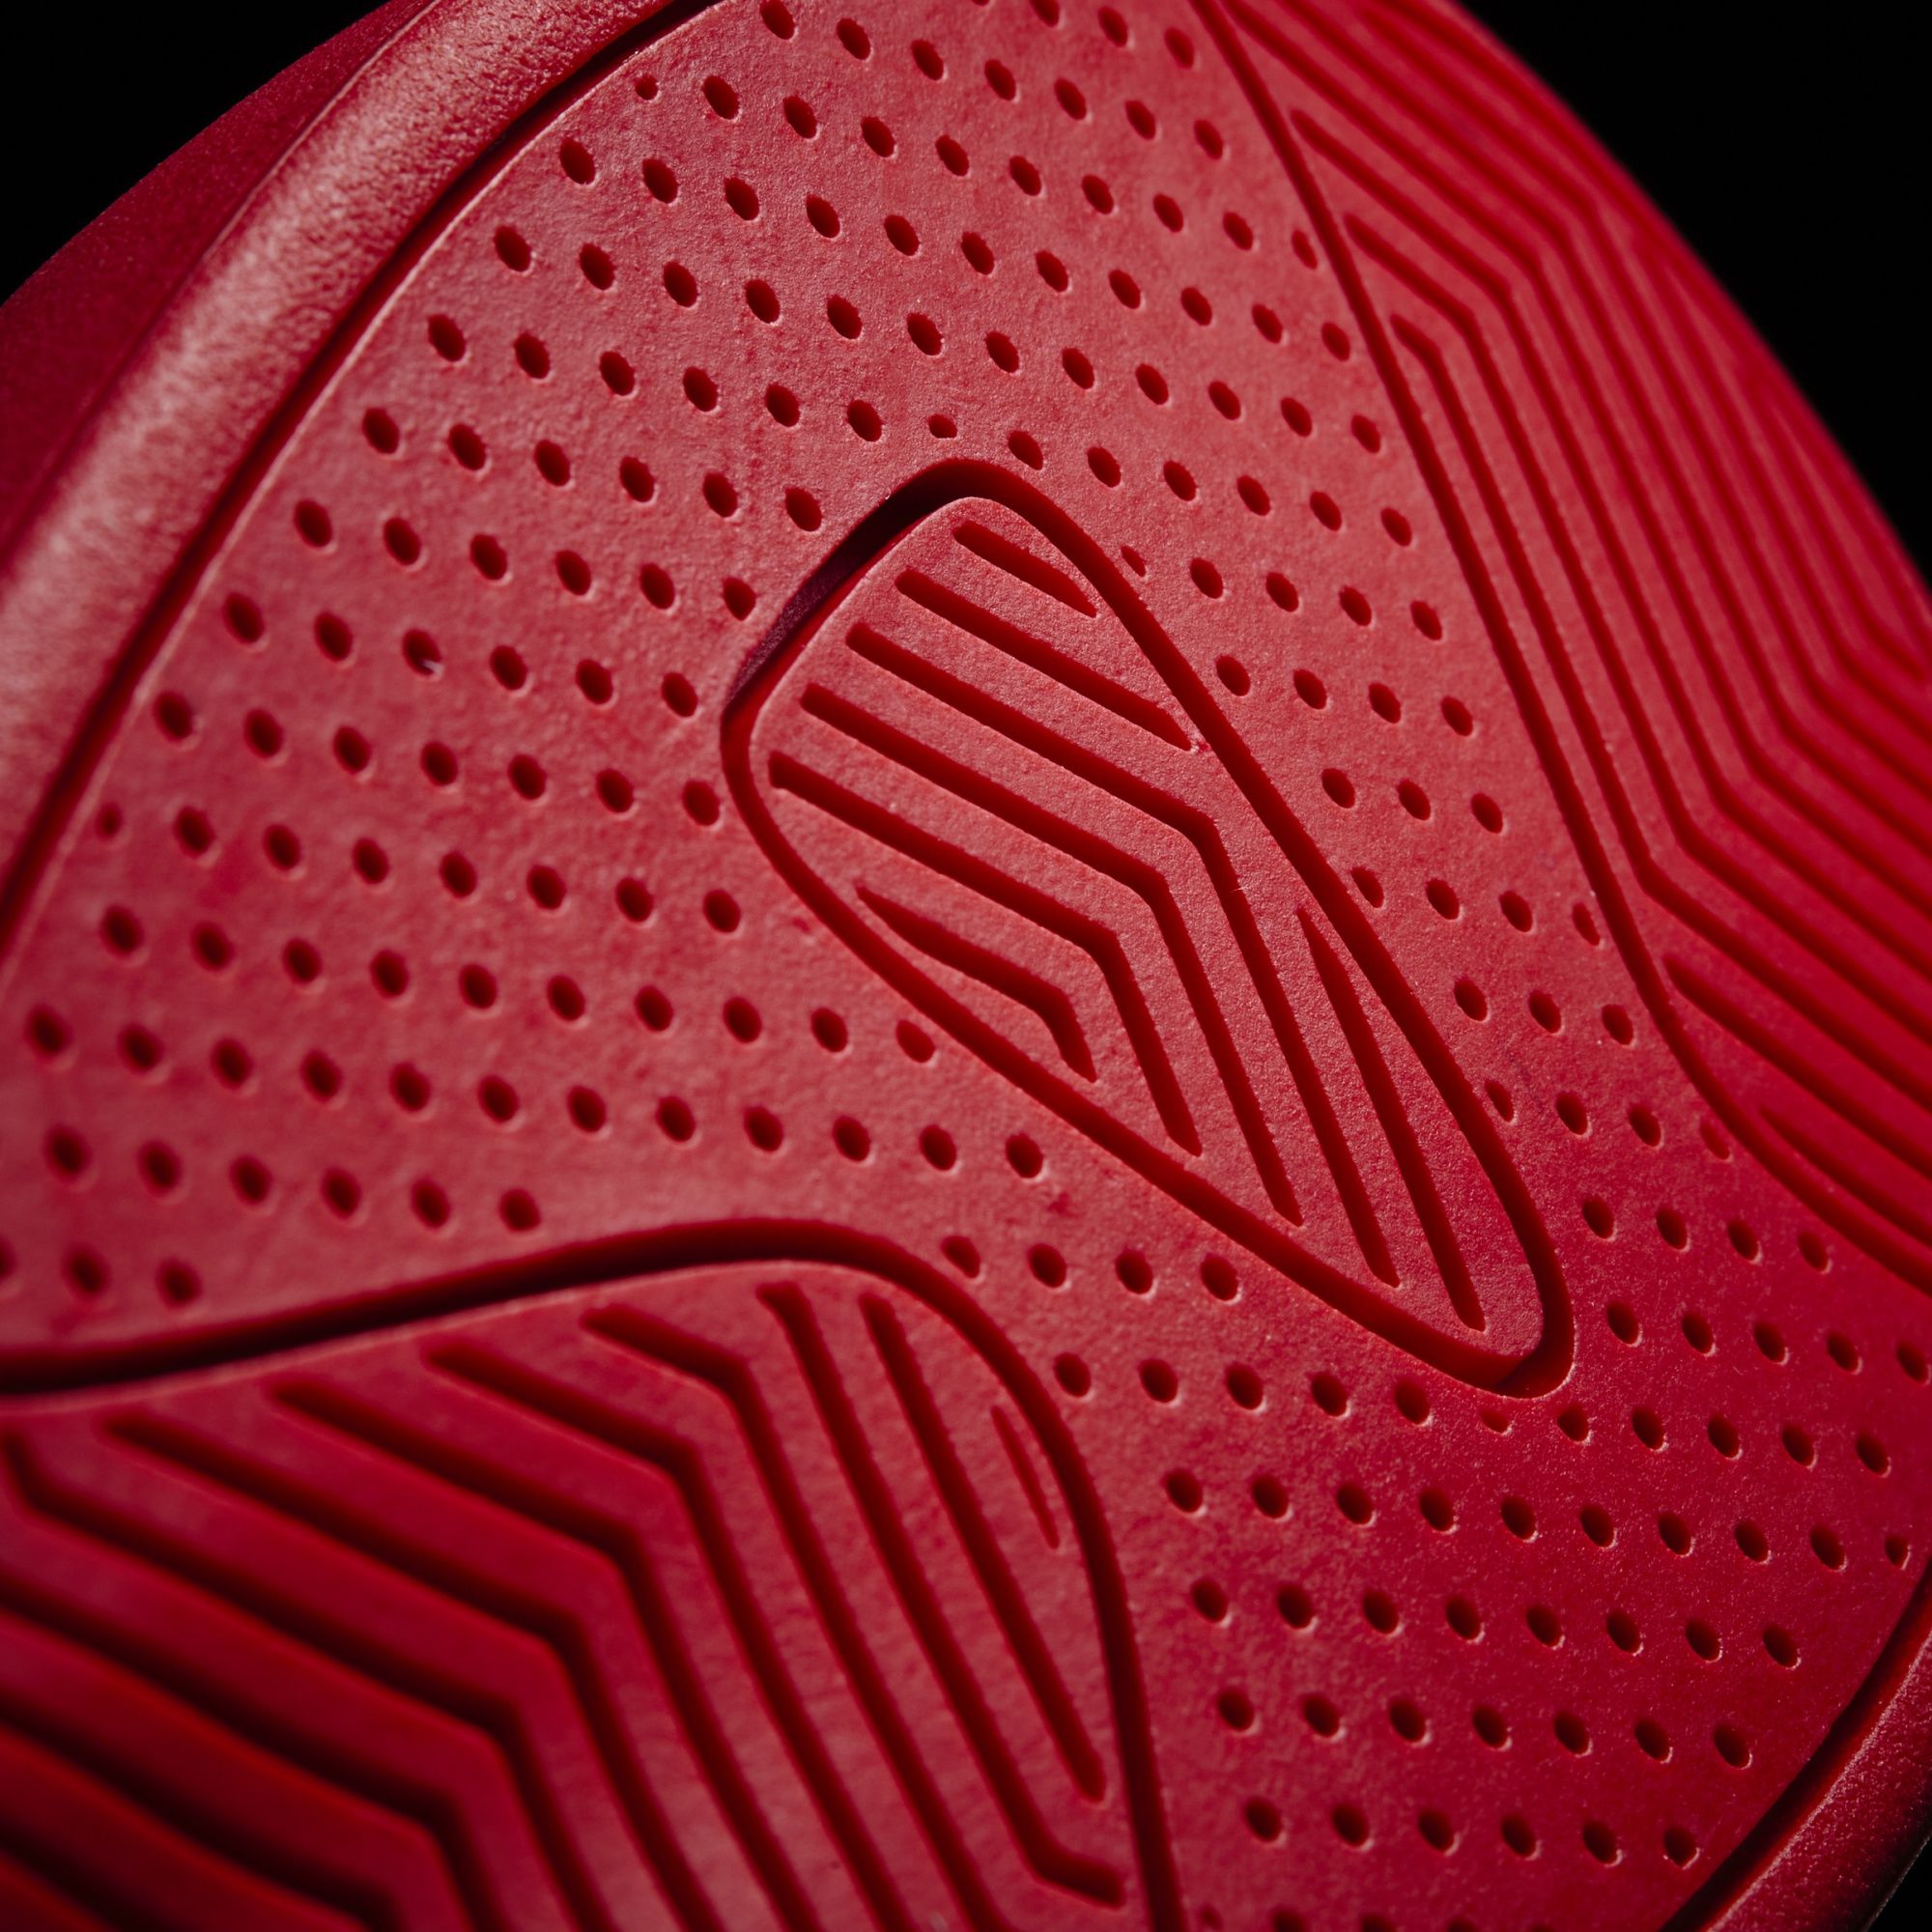 adidas Tubular Invader Red October Sole Close